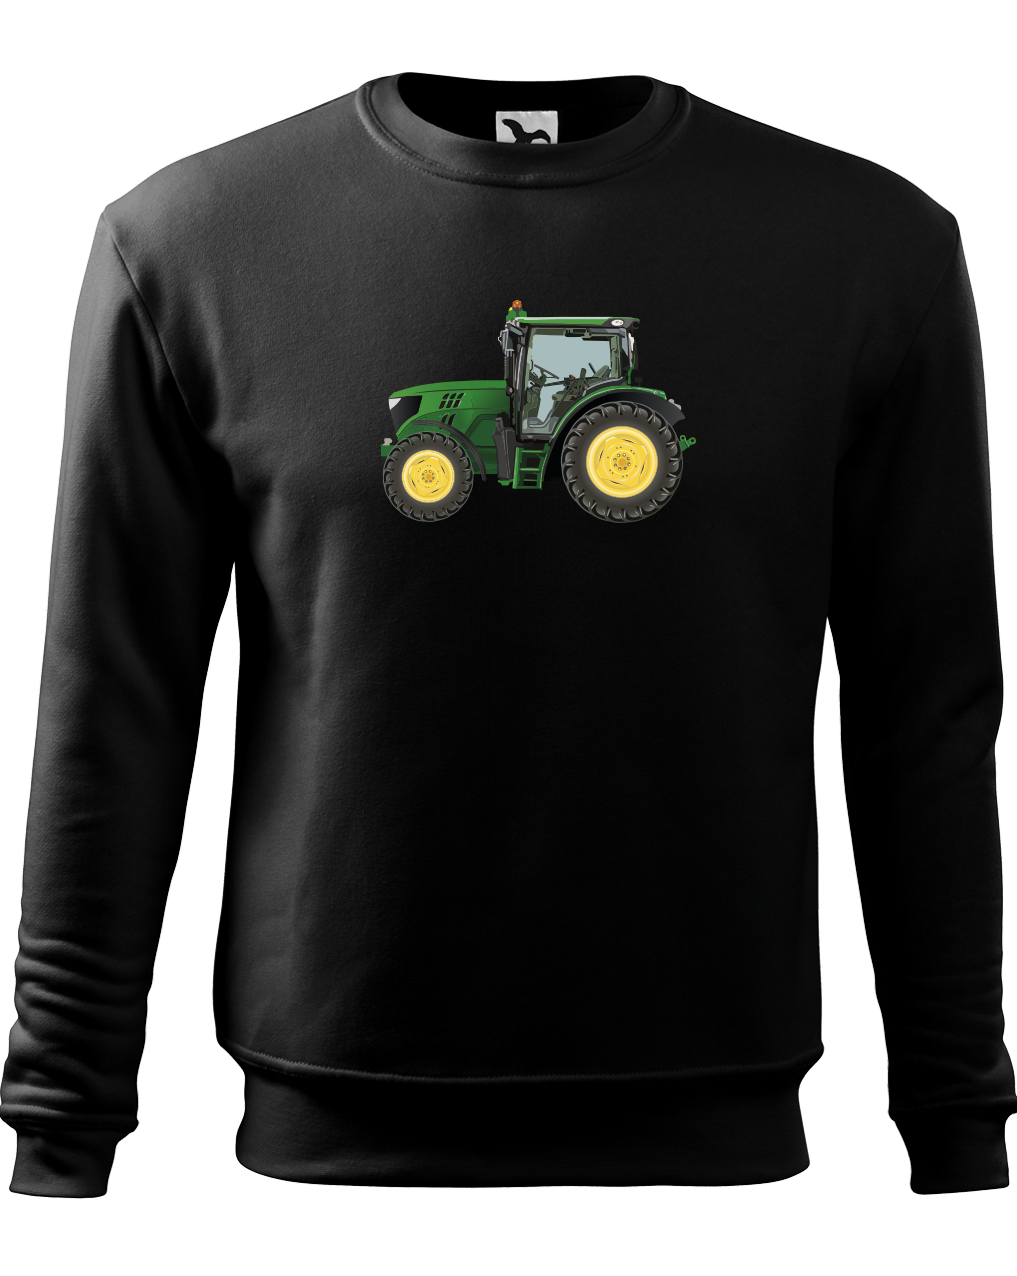 Mikina s traktorem - Zelený traktor Velikost: L, Barva: Černá